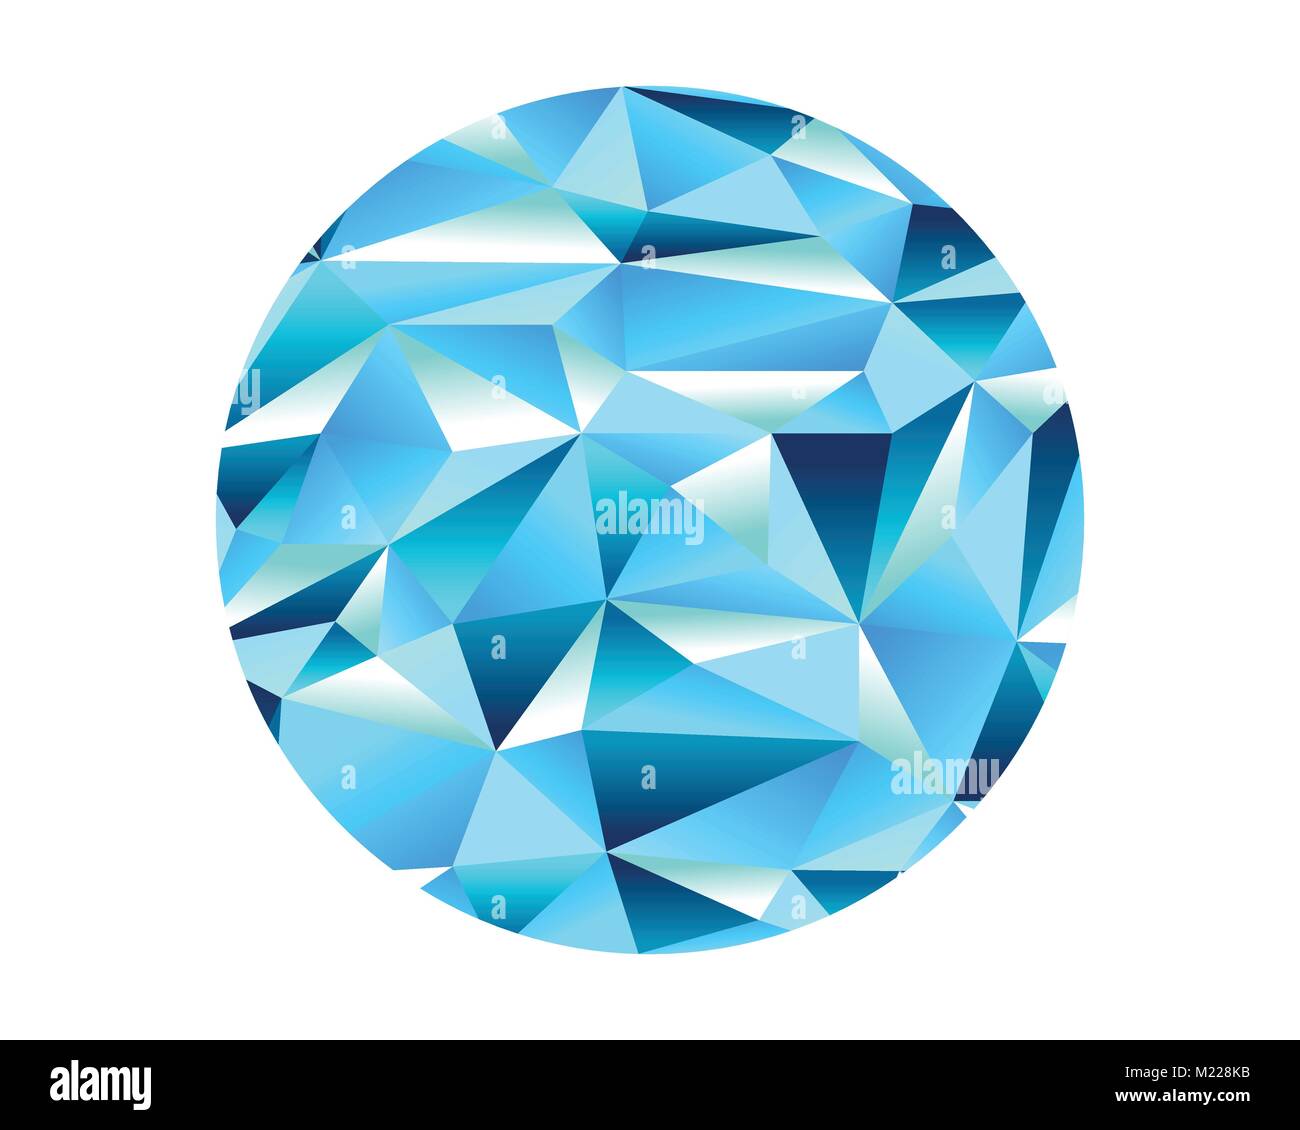 Diamond Ice Crystal Low Poly Ellipsenform Vektorgrafik Hintergrund Design Stock Vektor